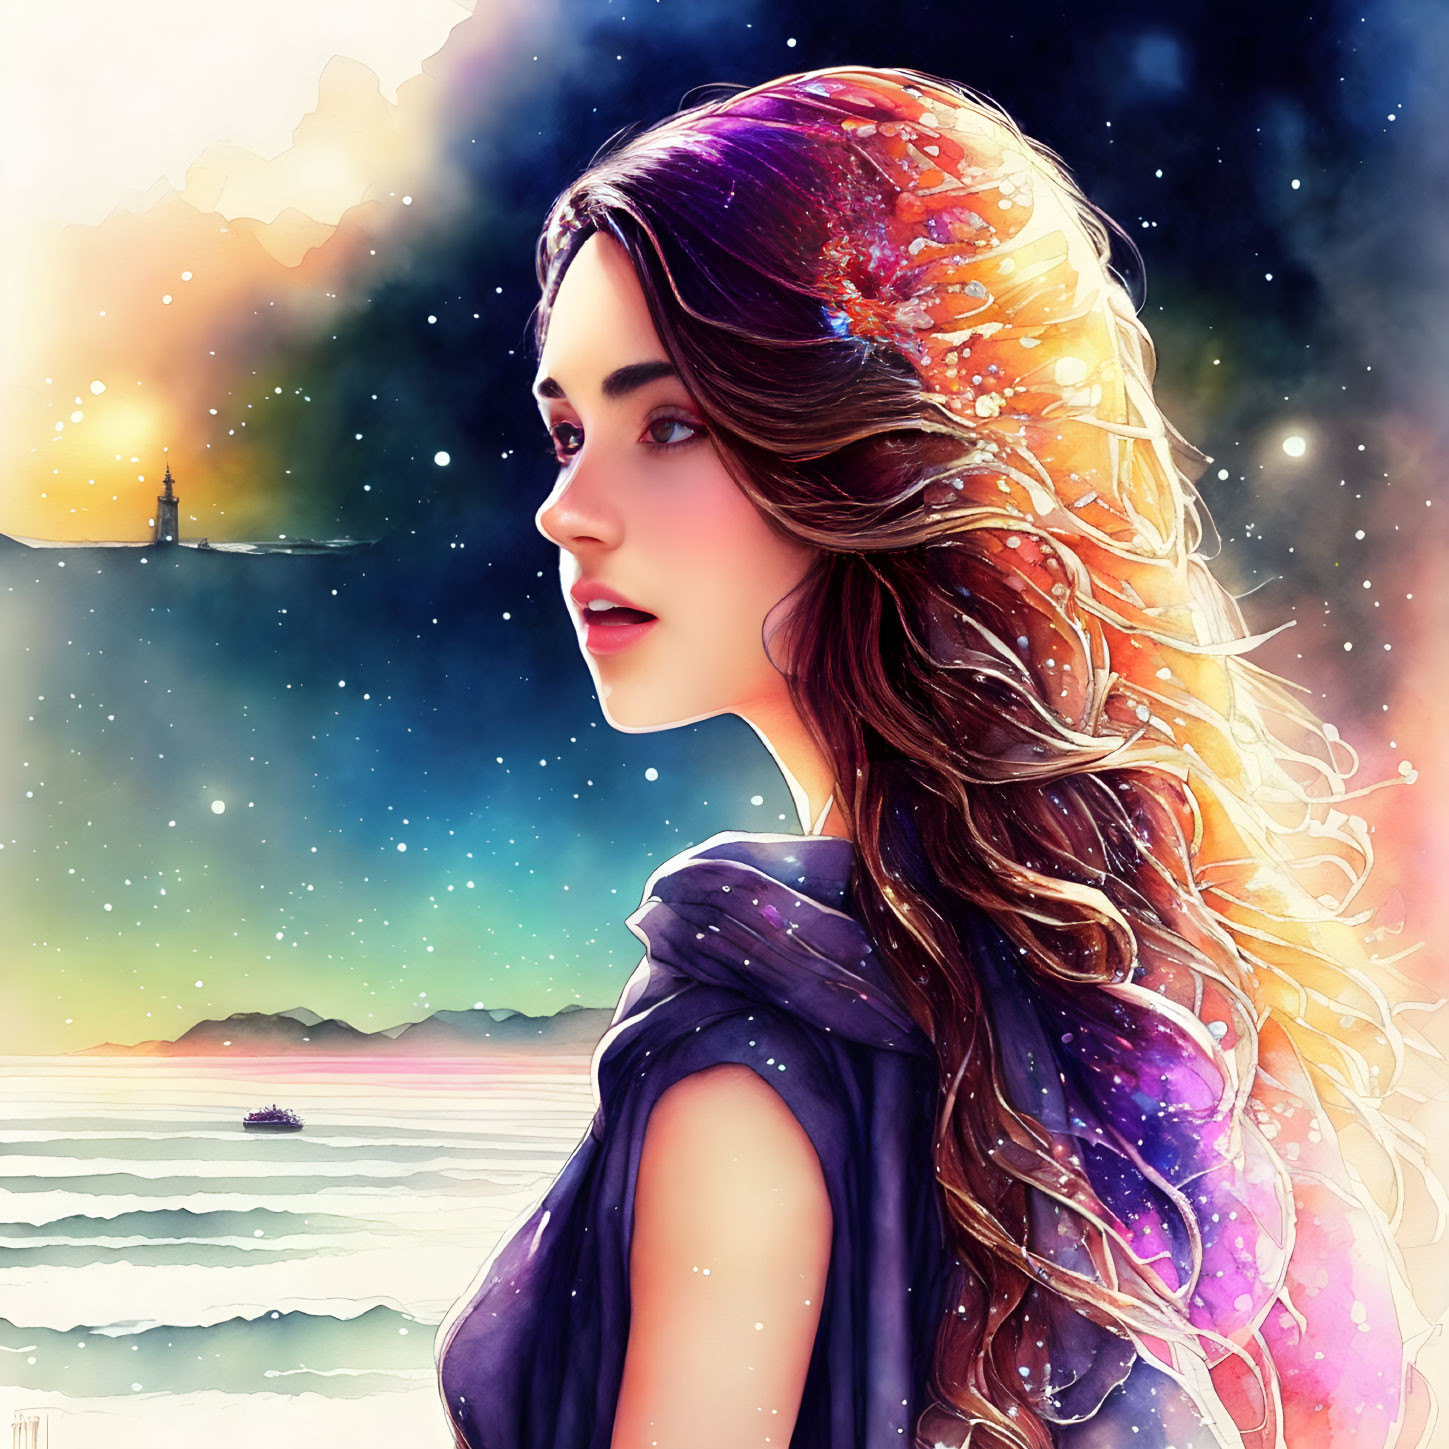 Digital art: Woman with cosmic hair in starry sky backdrop